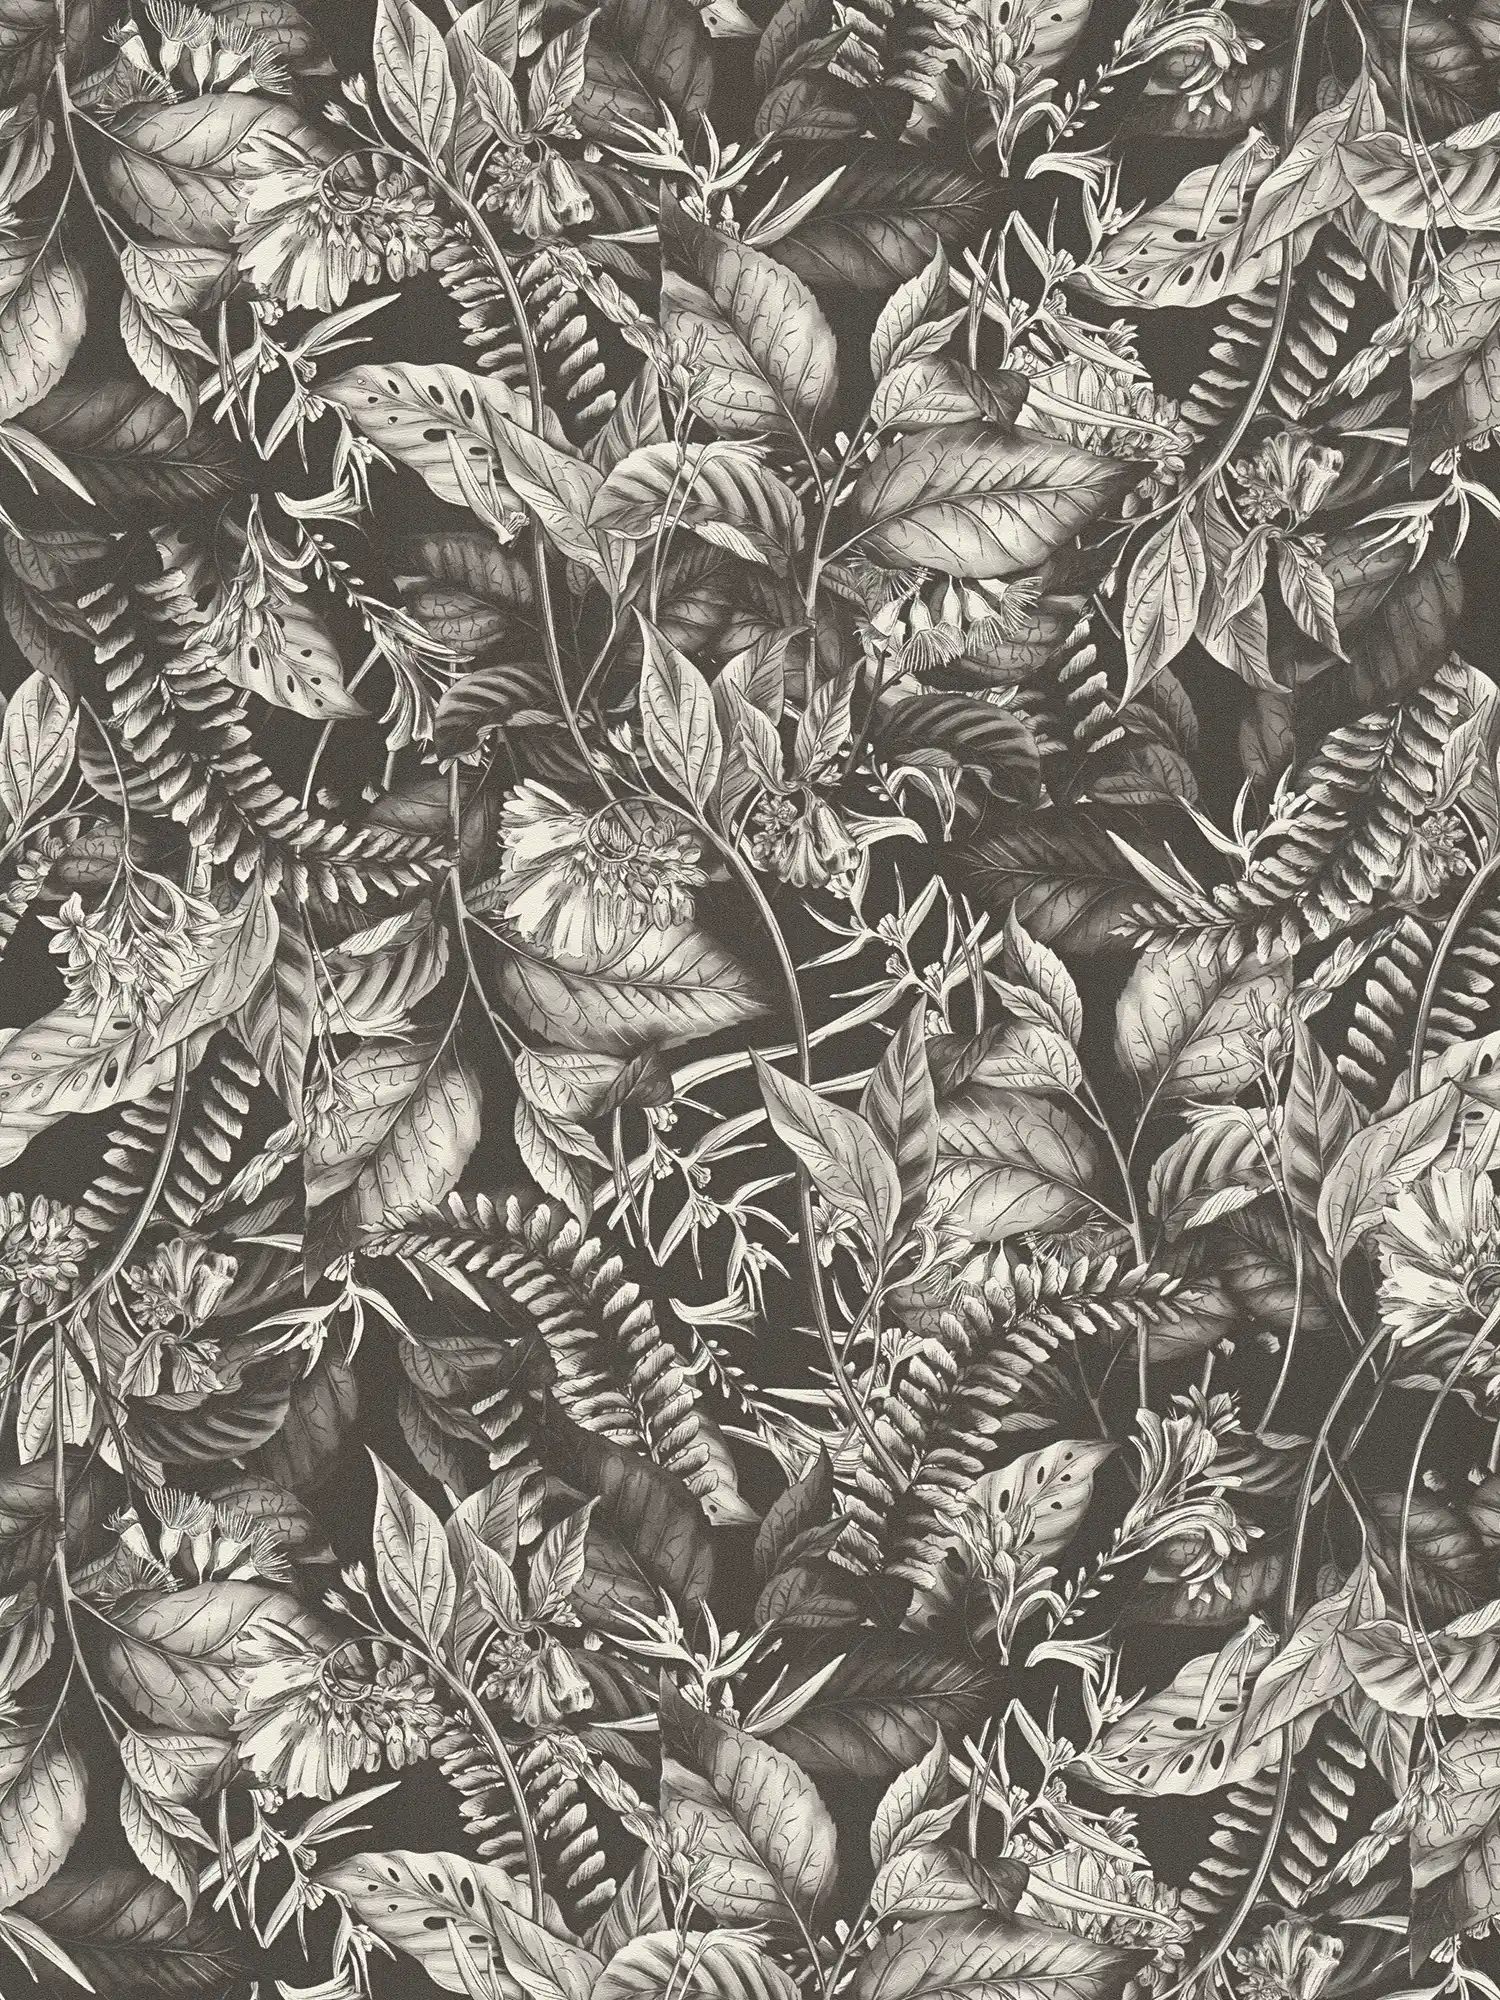 wallpaper floral with leaves & flowers textured matt - black, white
